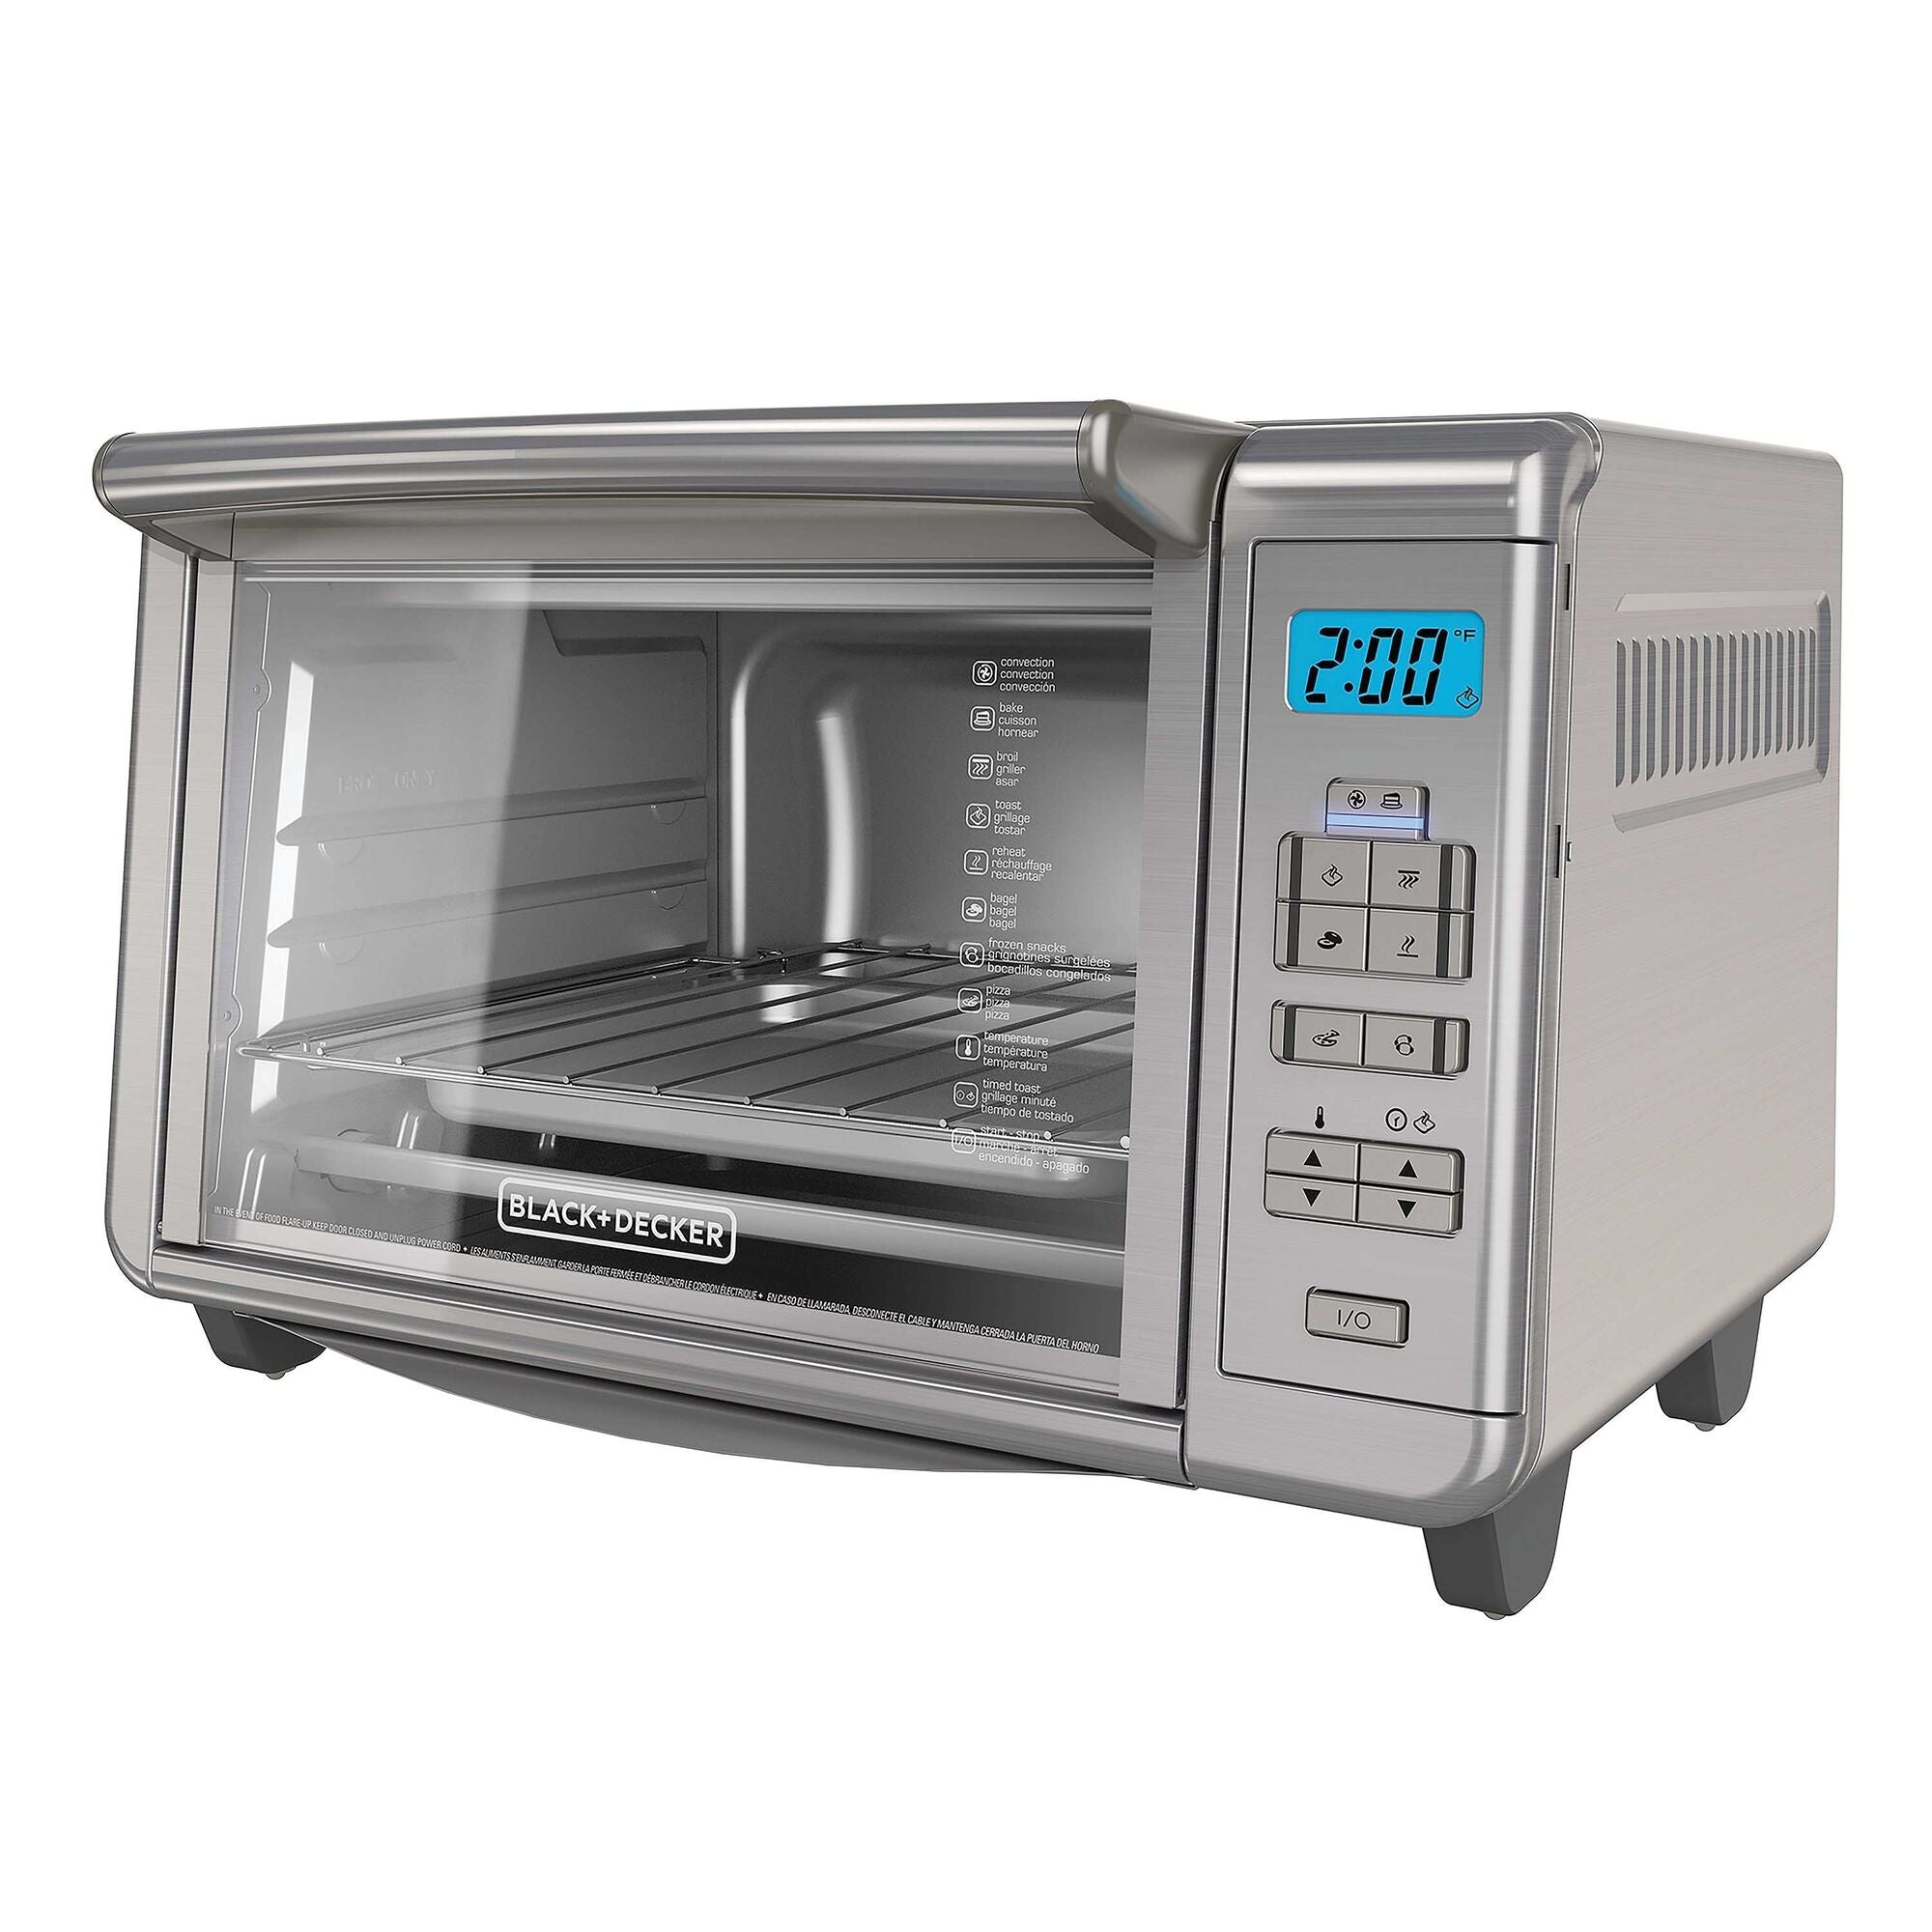 Black+Decker EM720CB7 Digital Microwave Oven Review 